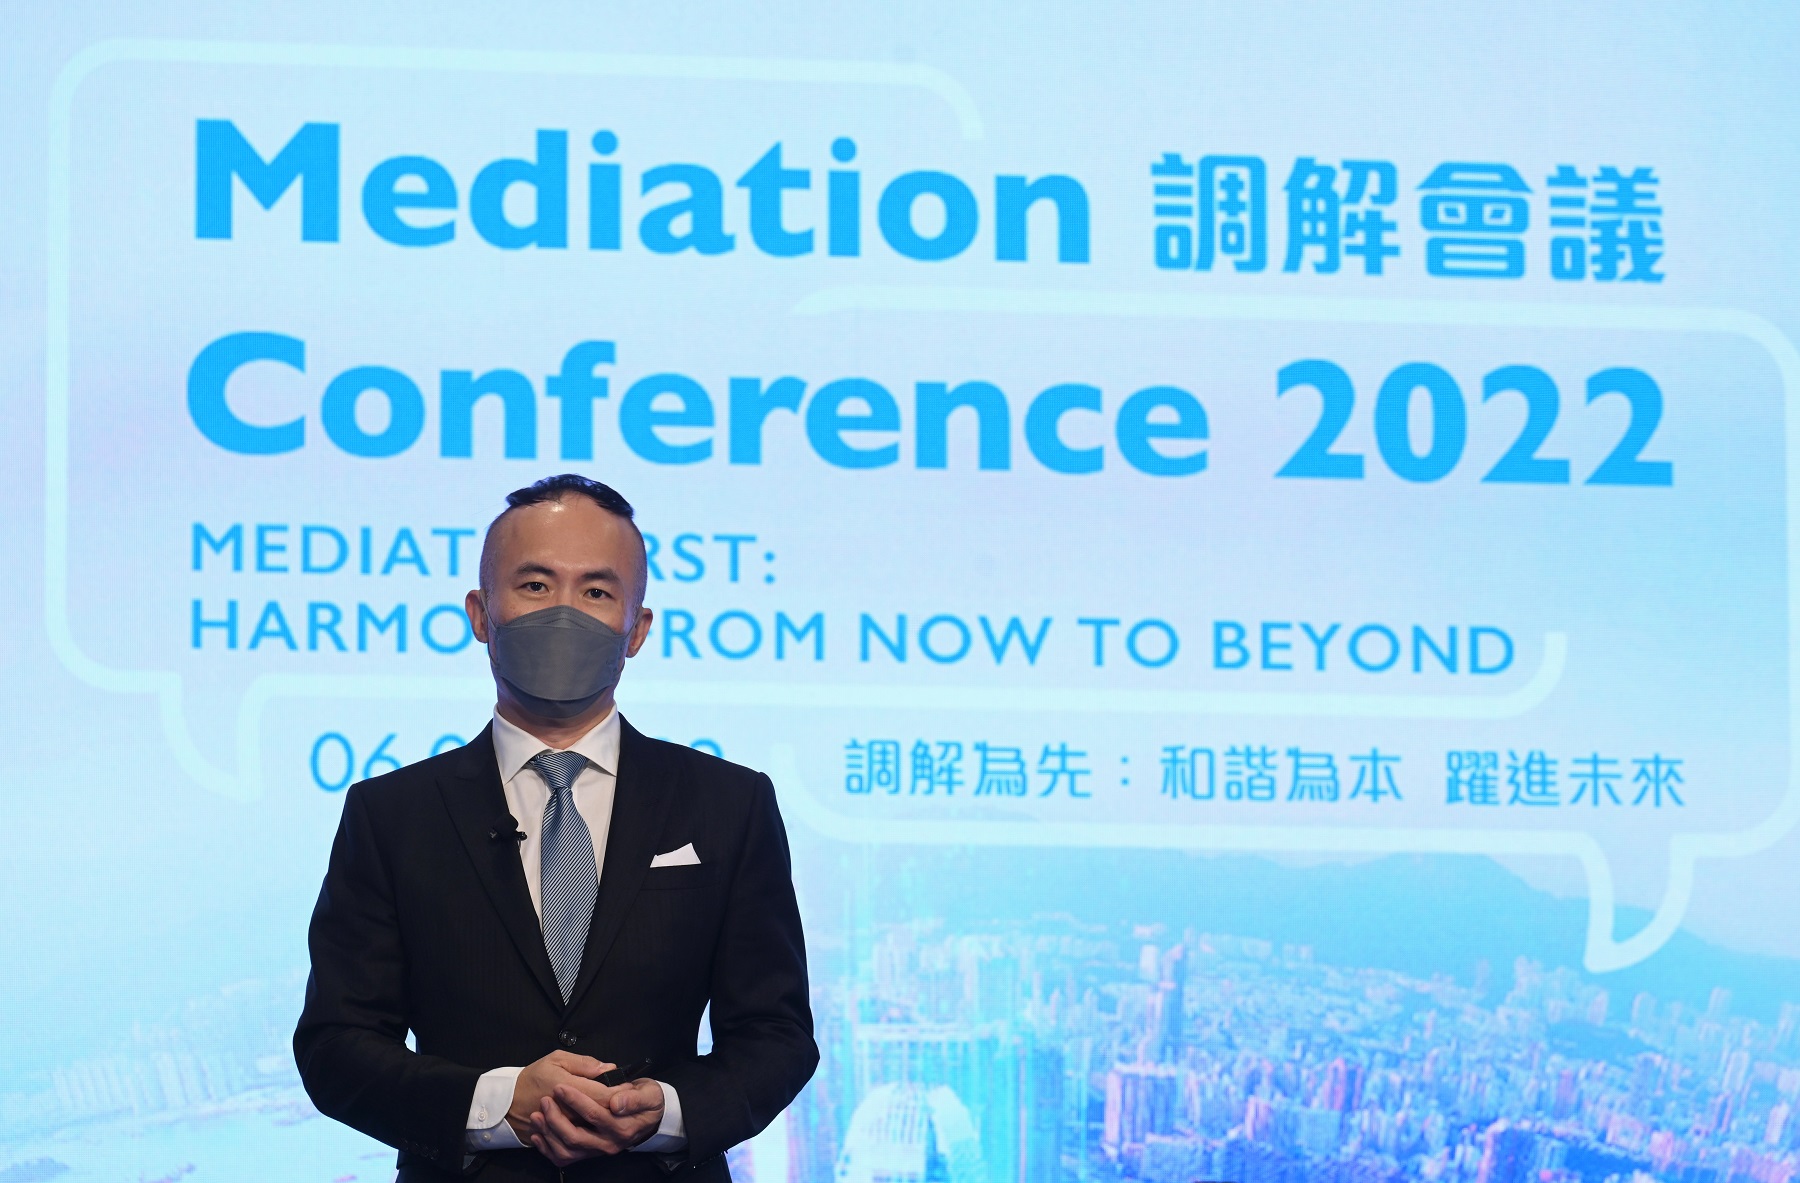 Mediation Conference 2022 10